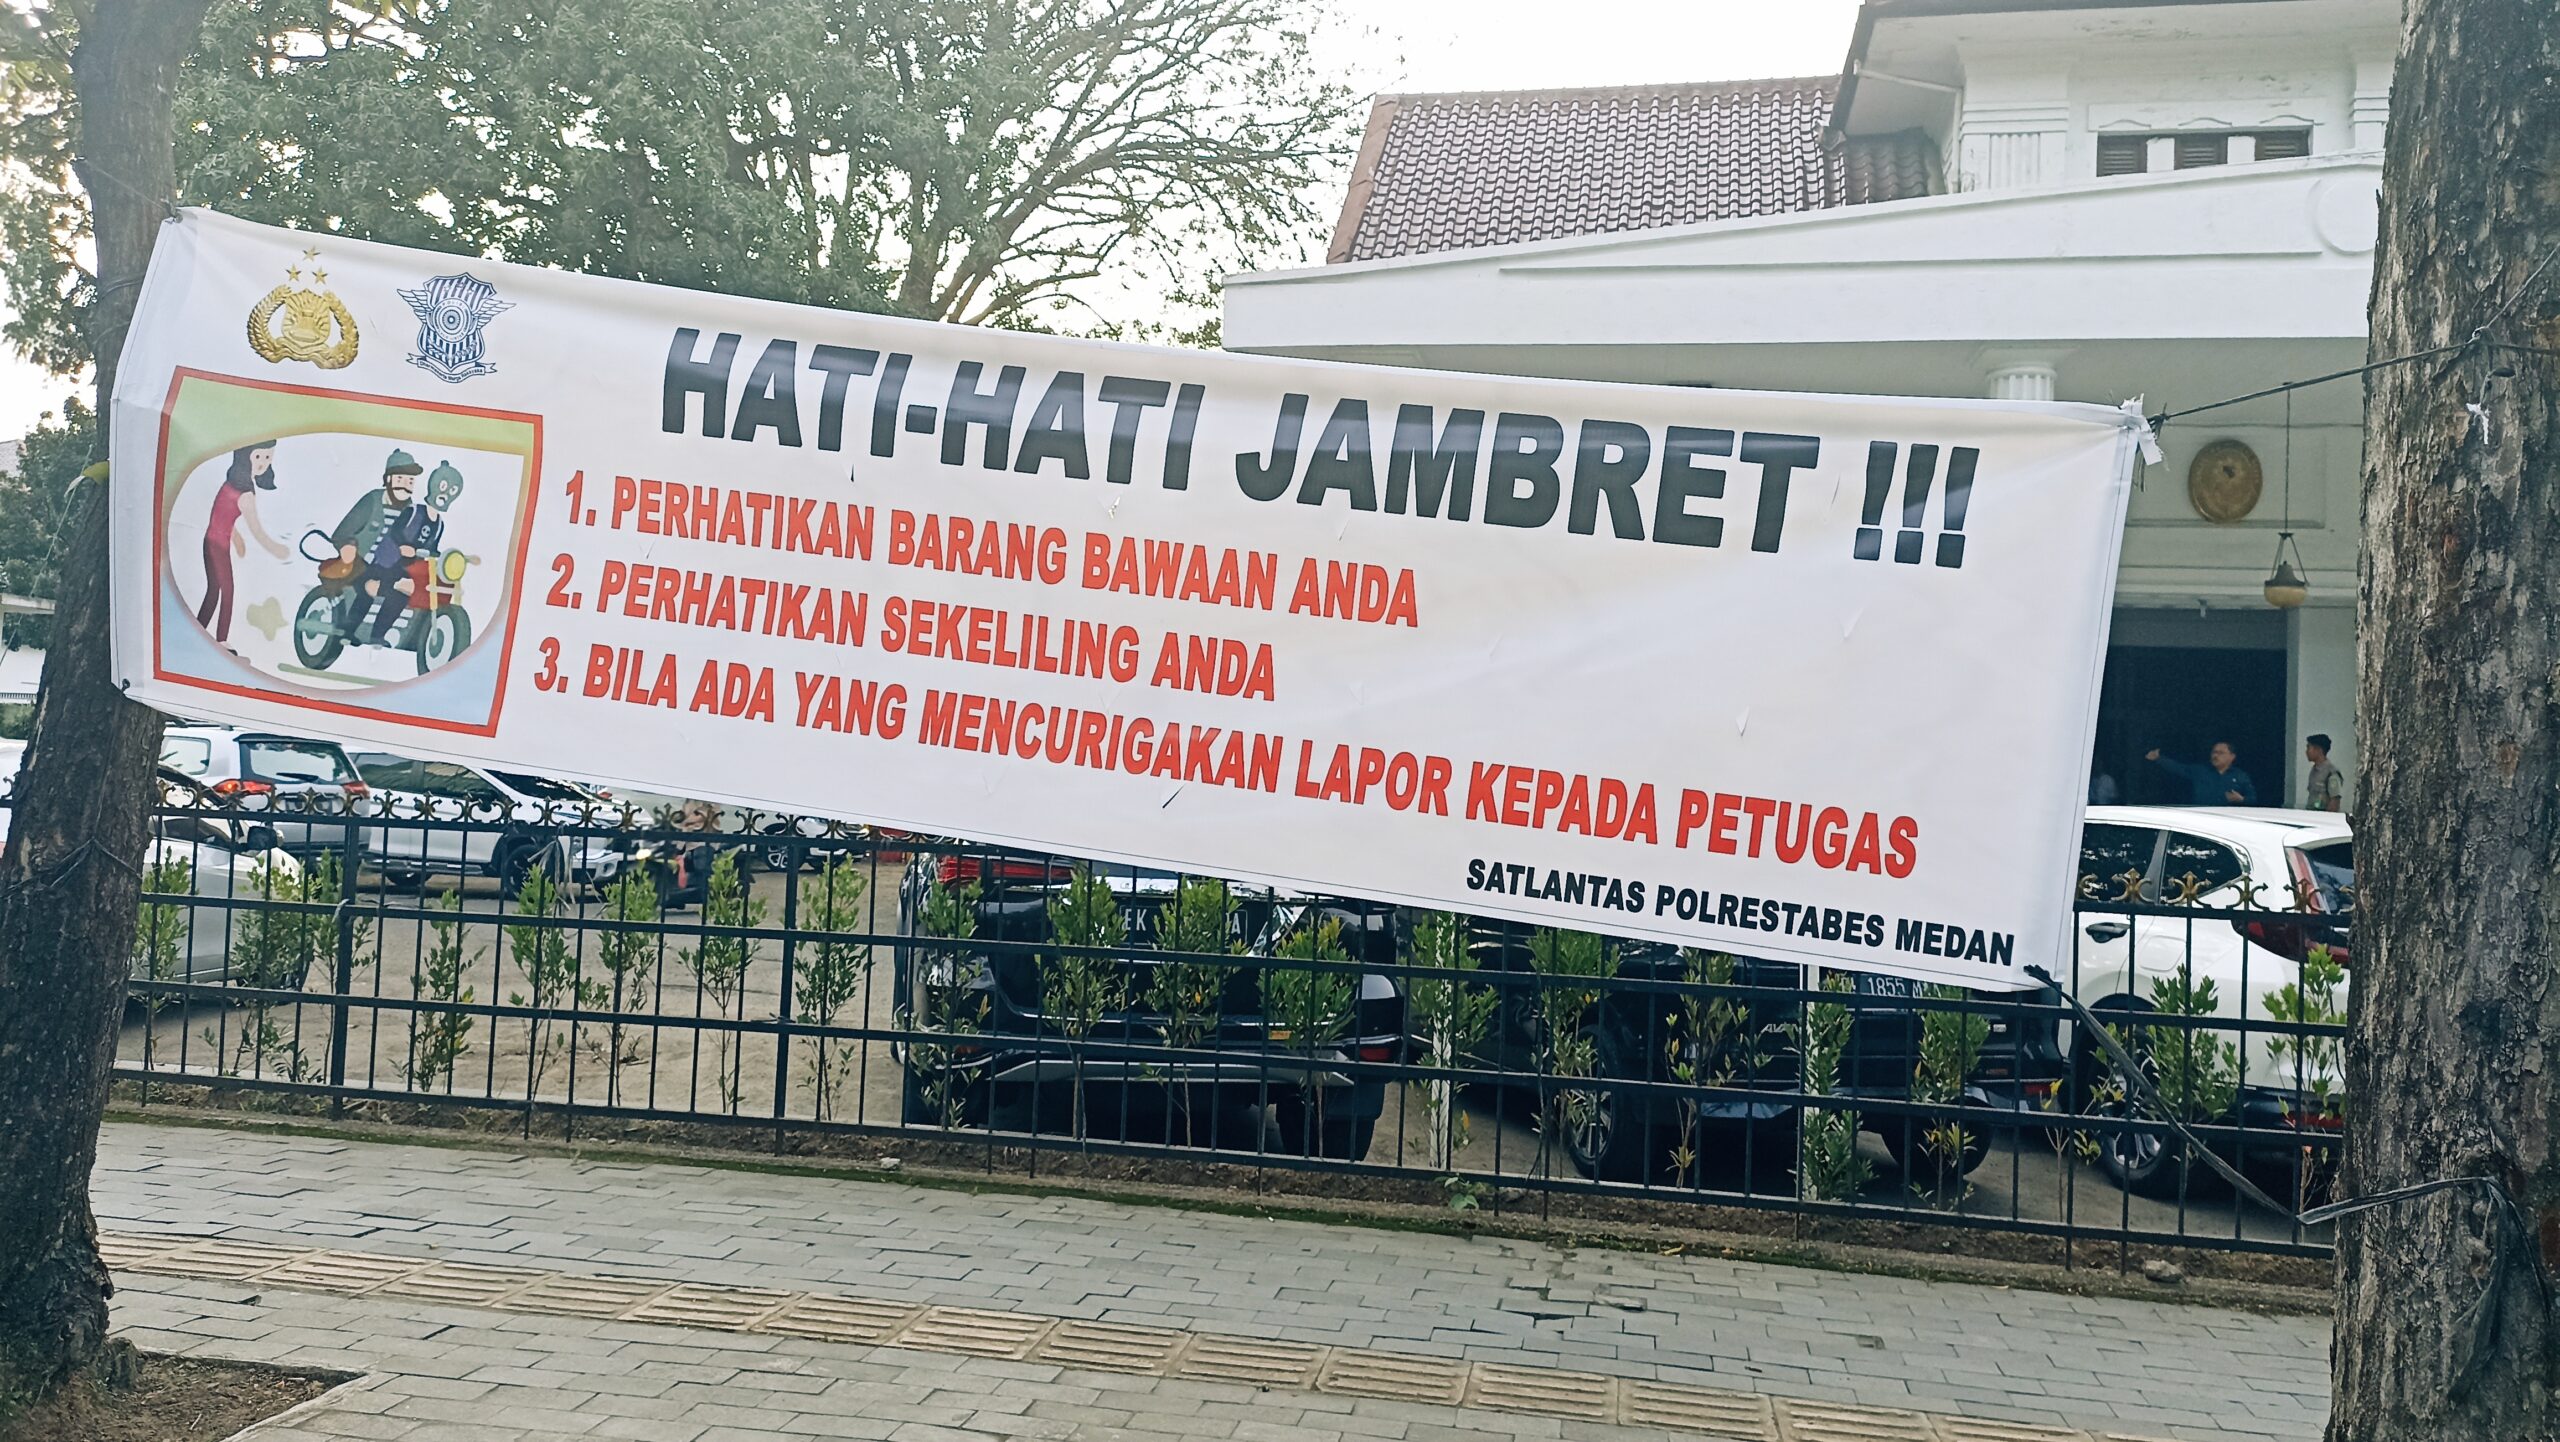 Himbauan Hati-hati Jambret "Menjamur" di Persimpangan Medan, Ada Apa?